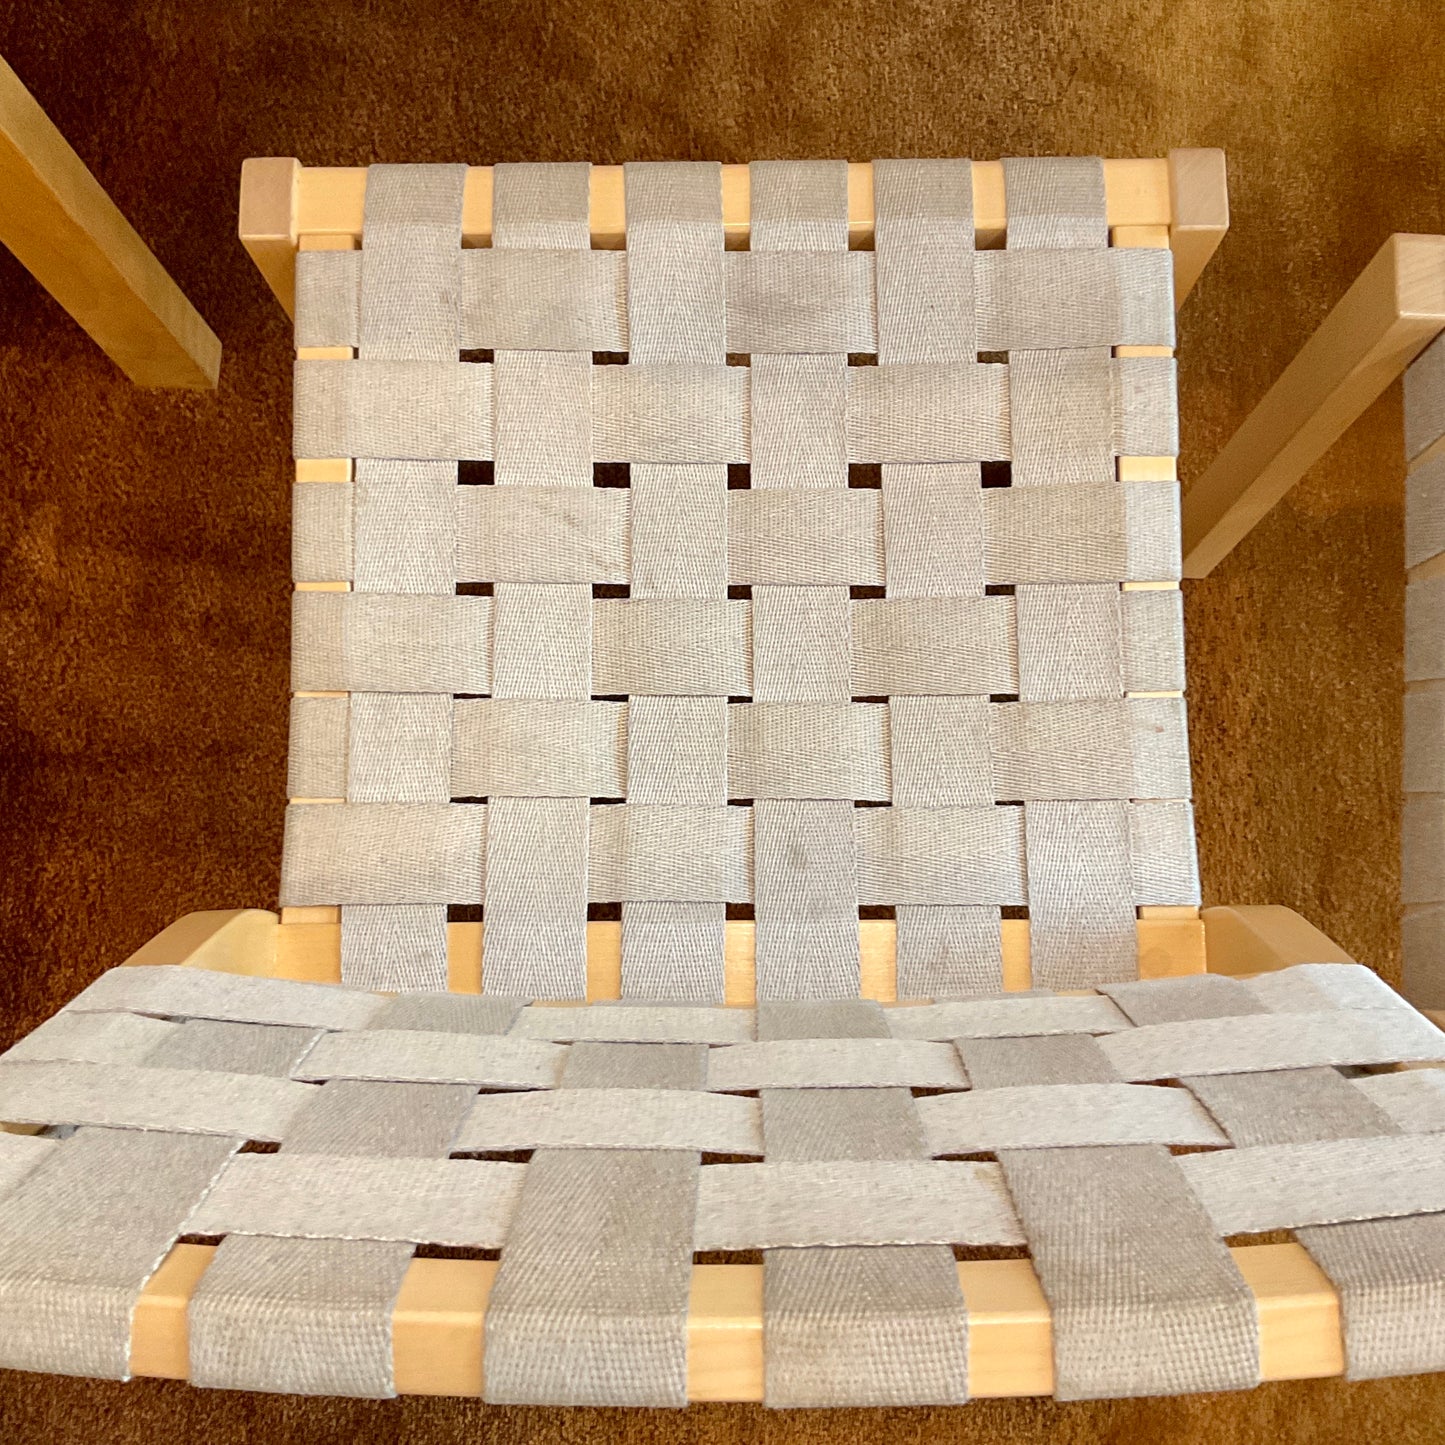 Set of SIX Chair 611 by Alvar Aalto for Artek